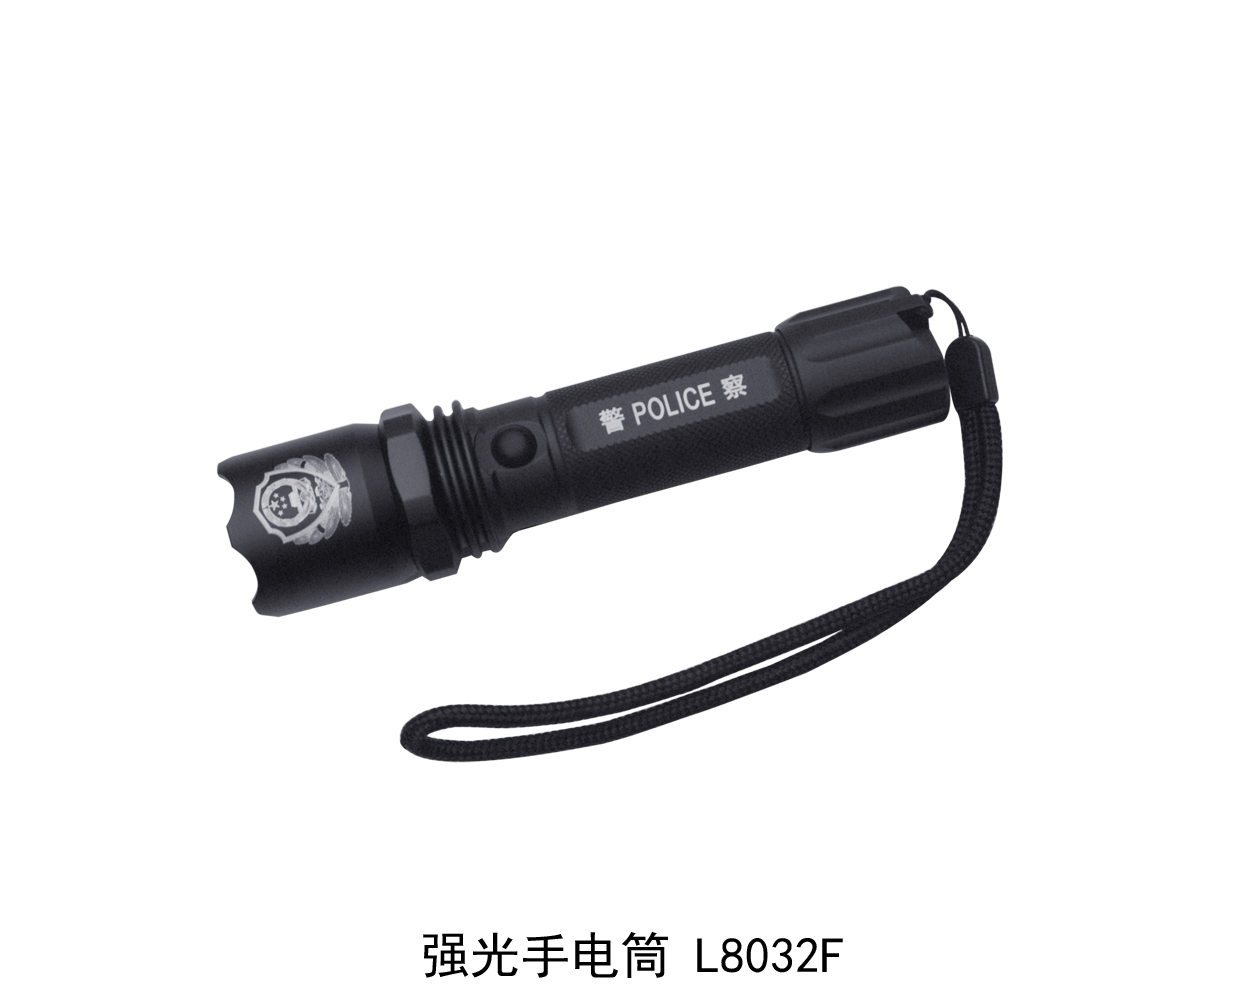 L8032F The strong light flashlight 